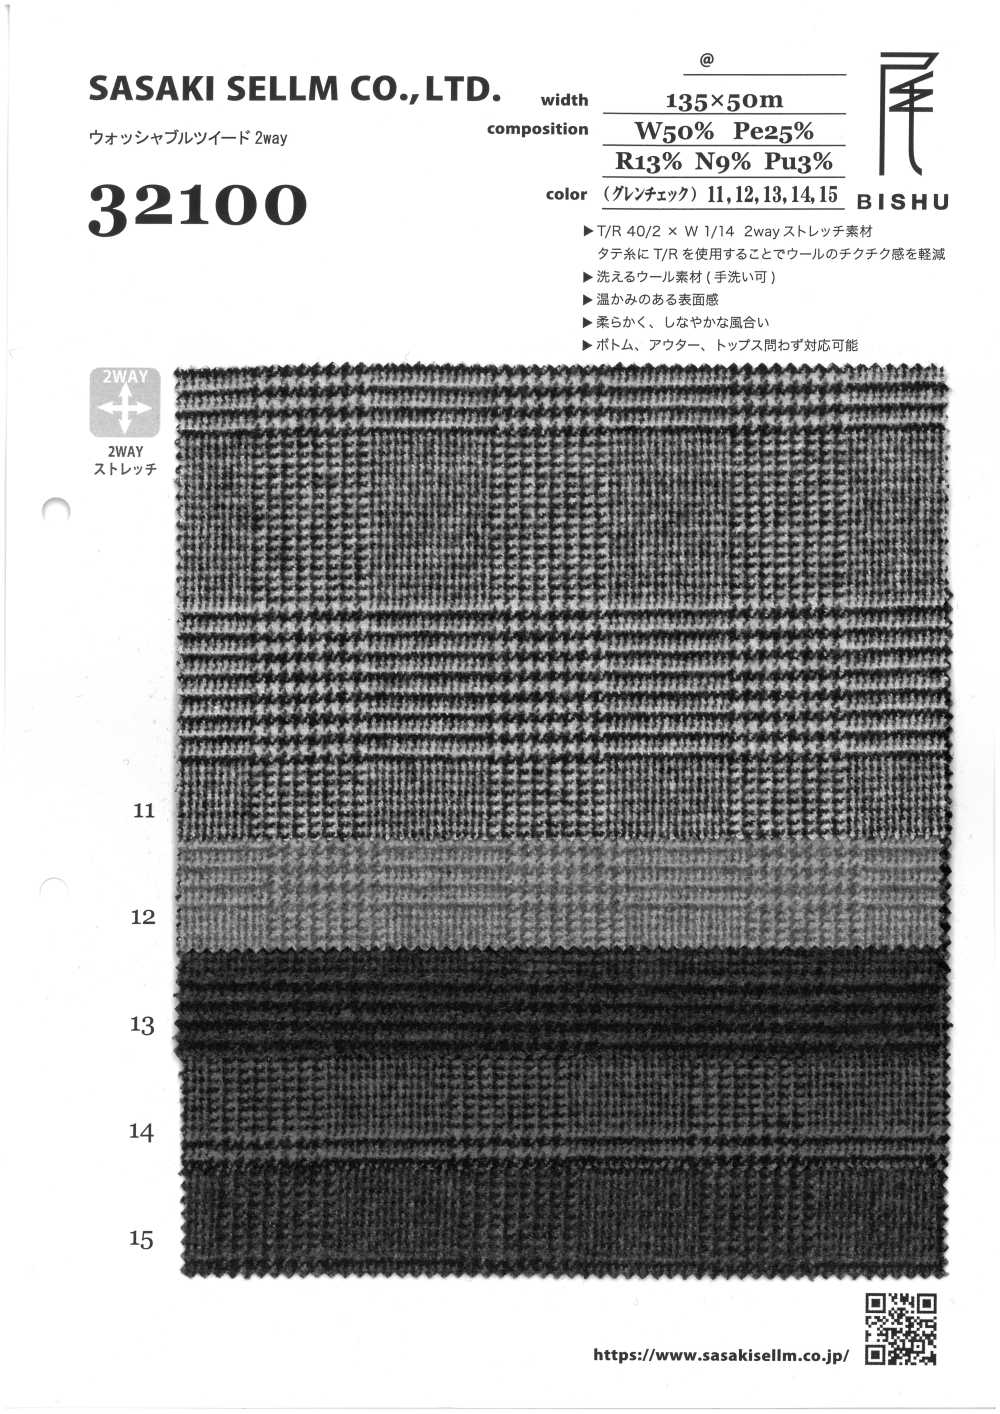 32100-10 Tweed Lavabile 2WAY Glen Check[Tessile / Tessuto] SASAKISELLM